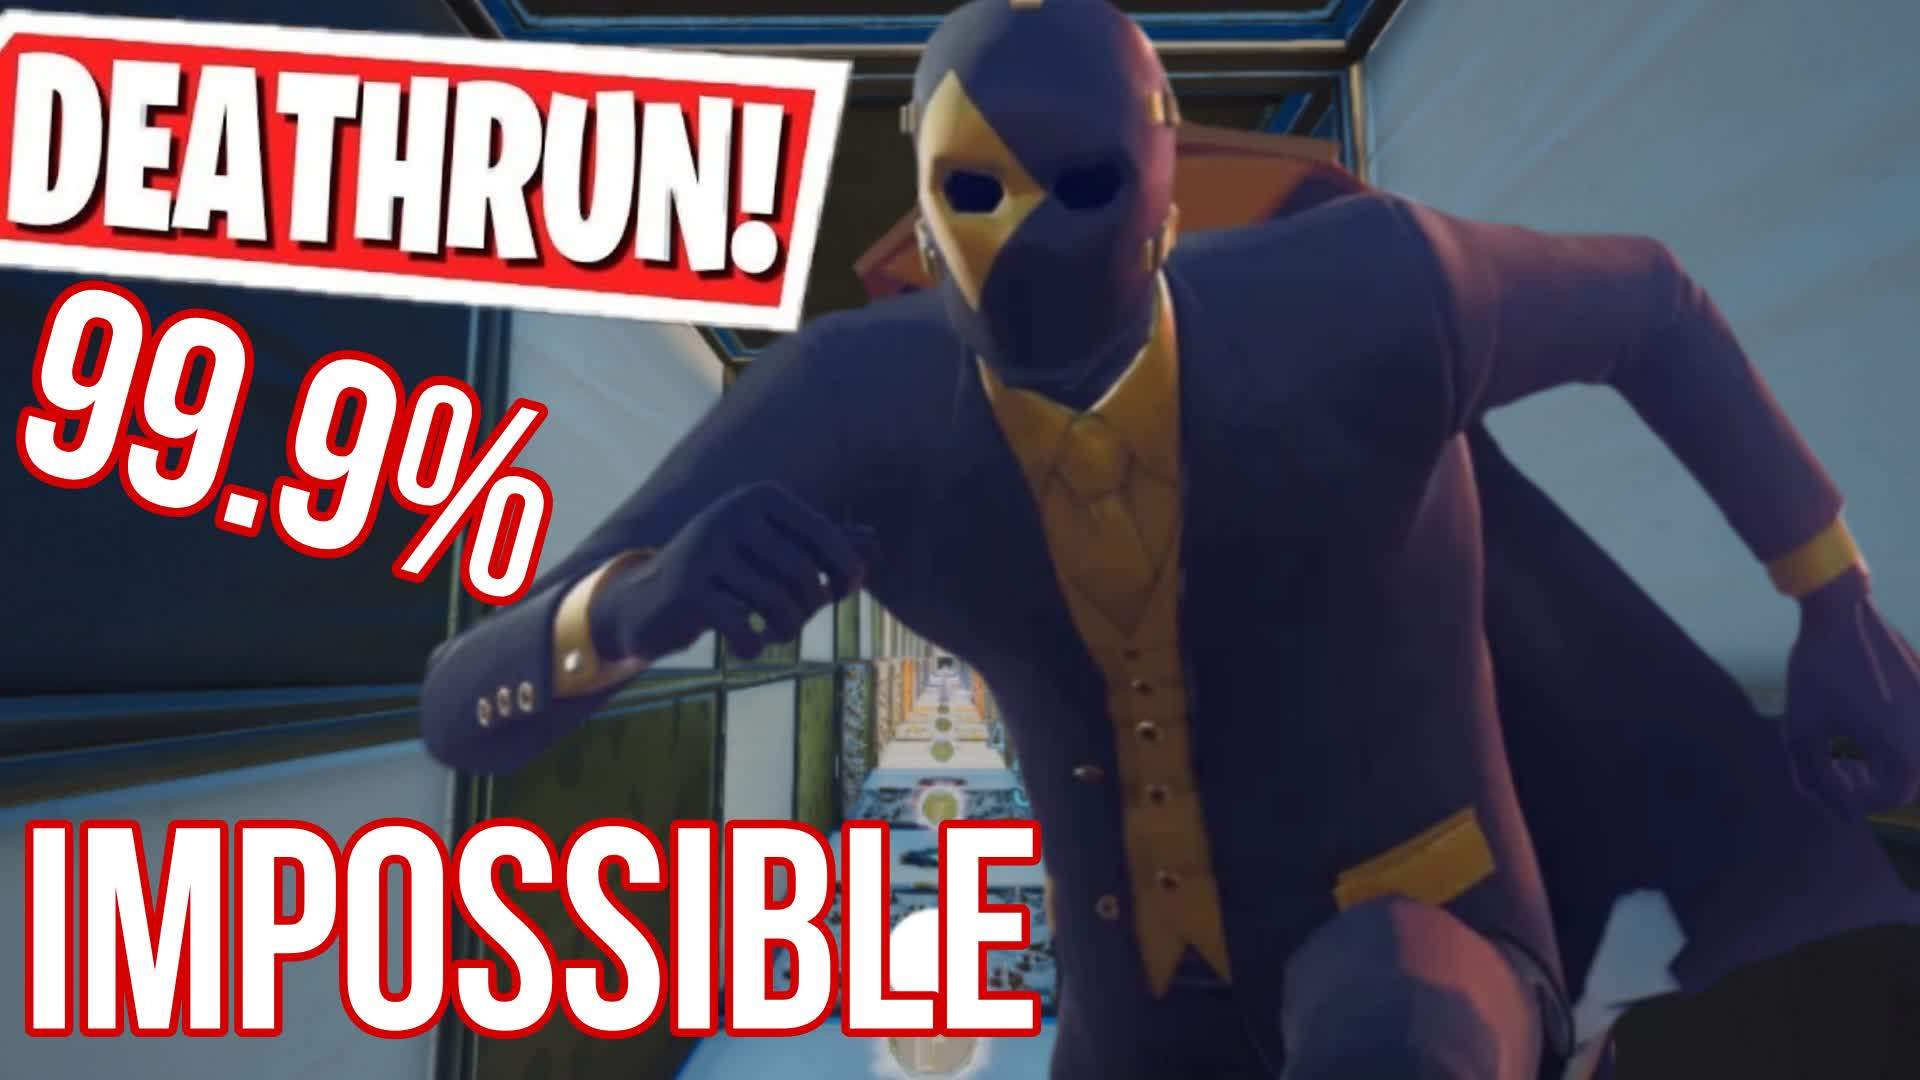 Deathrun 99.9% impossible